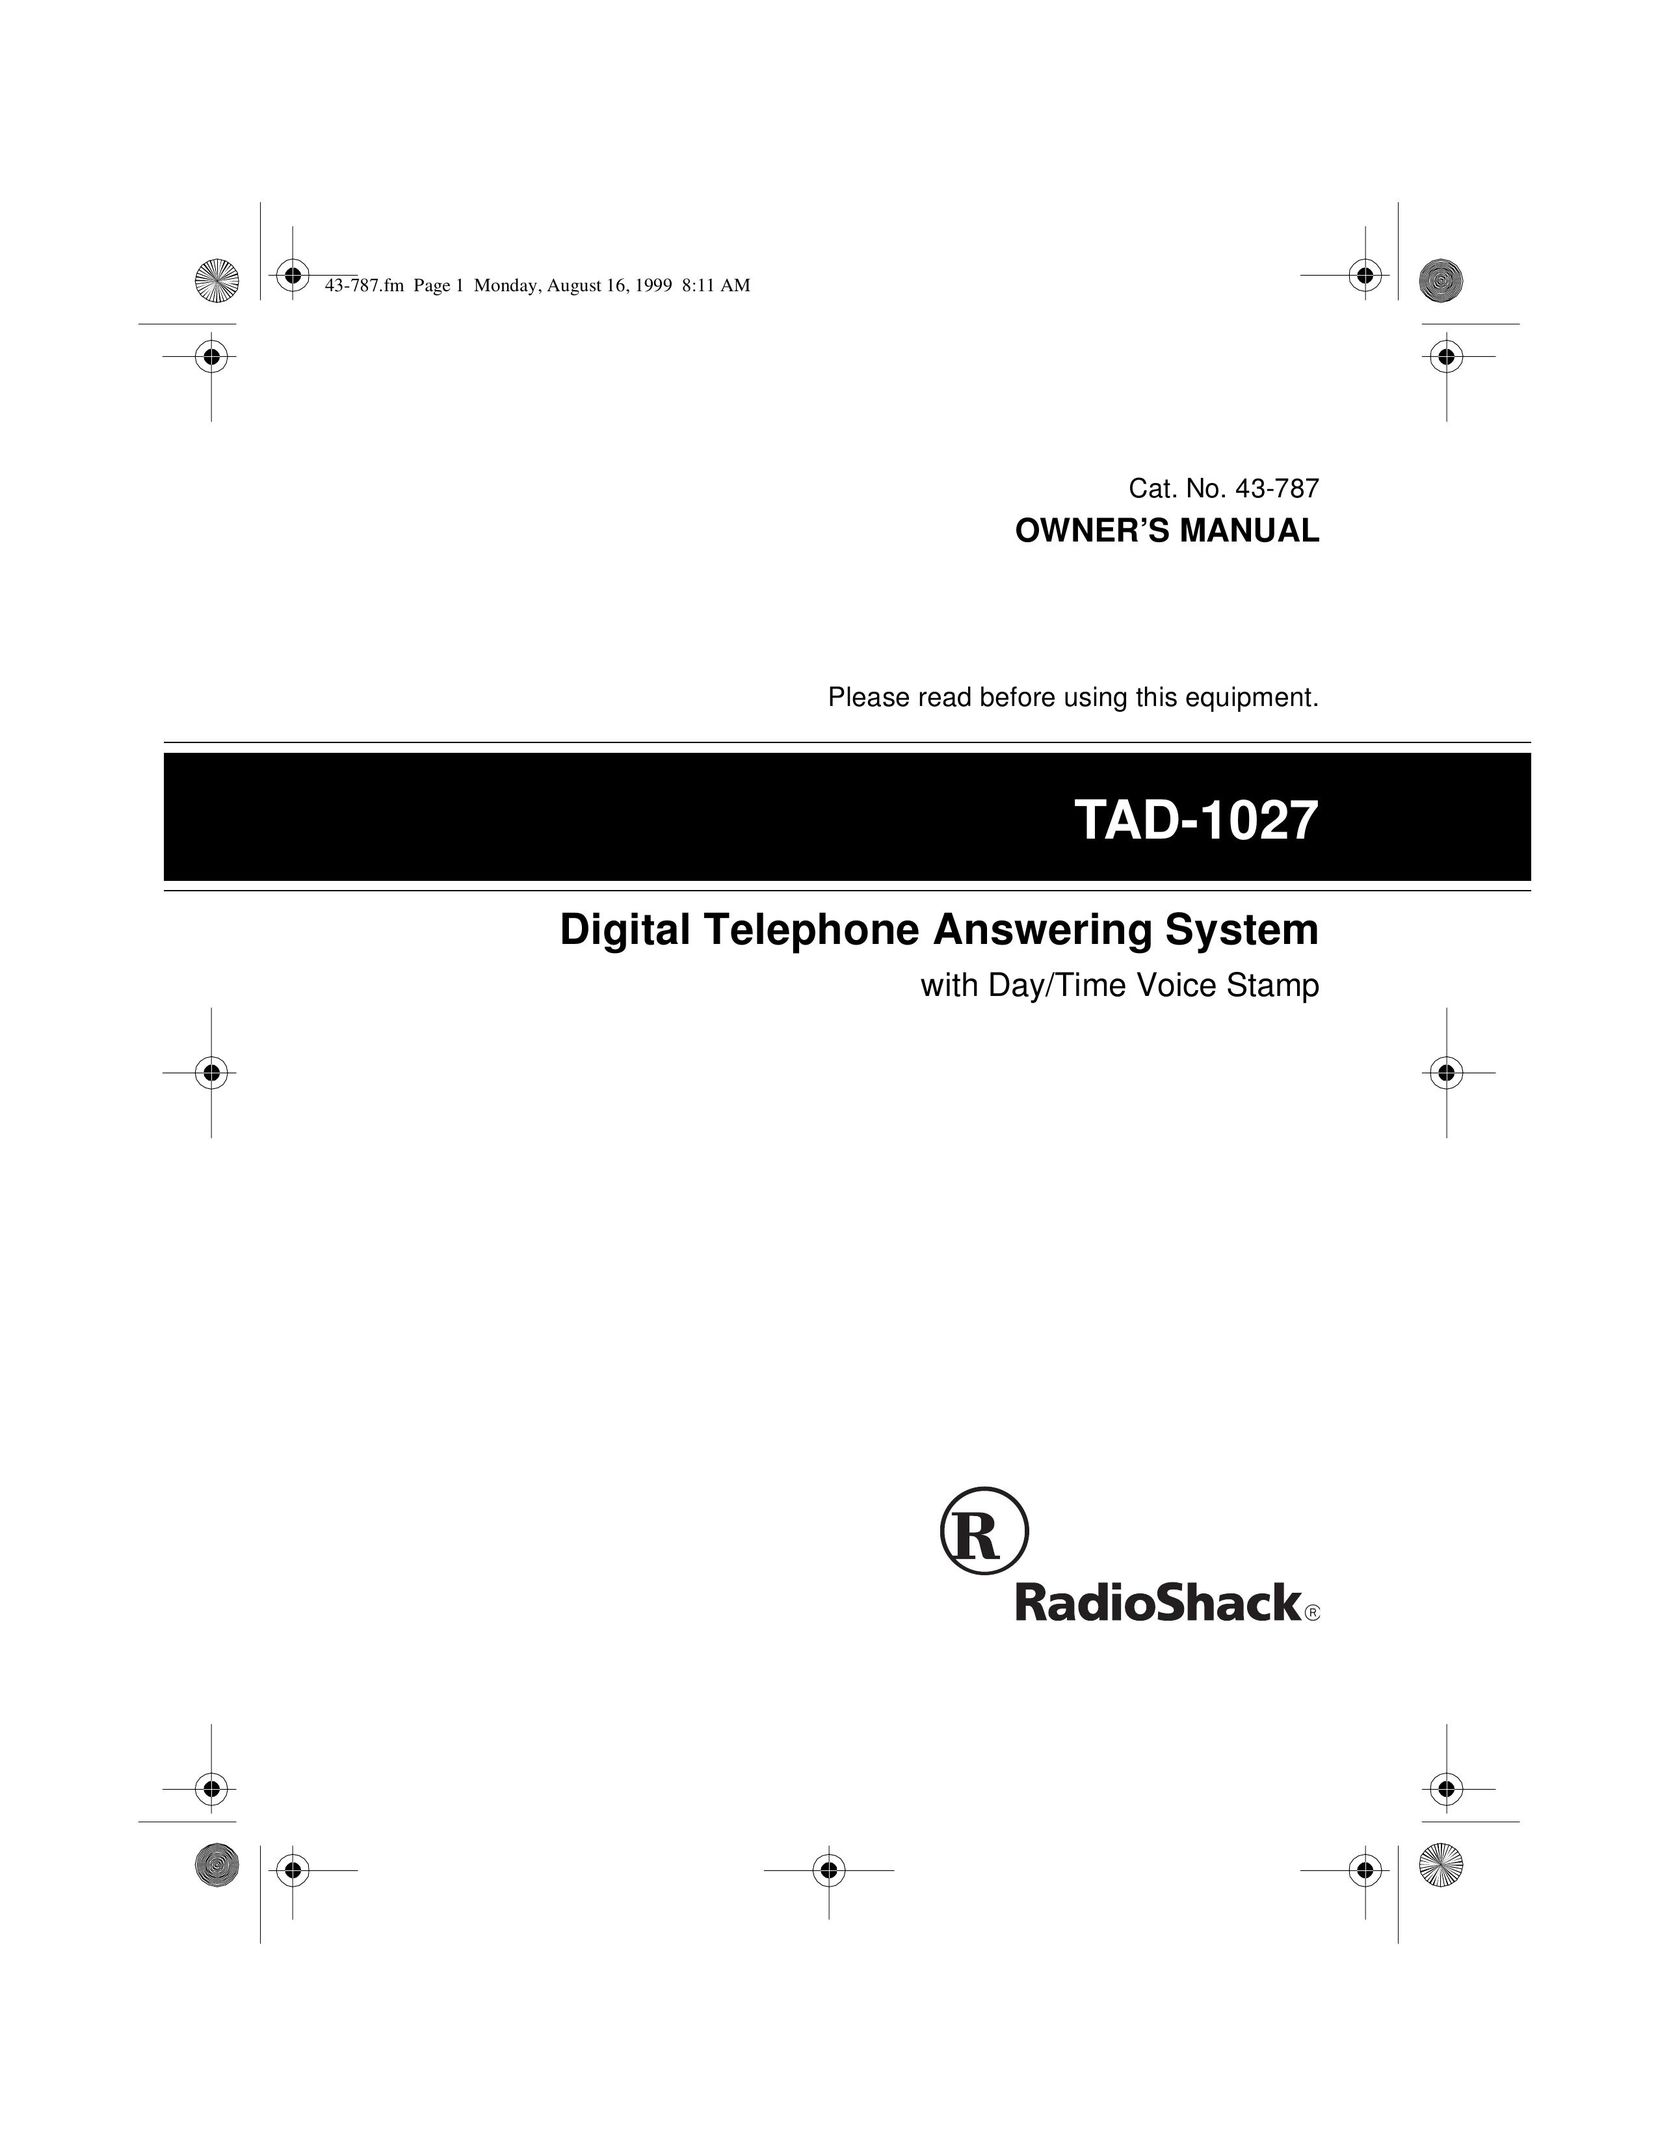 Radio Shack TAD-1027 Answering Machine User Manual